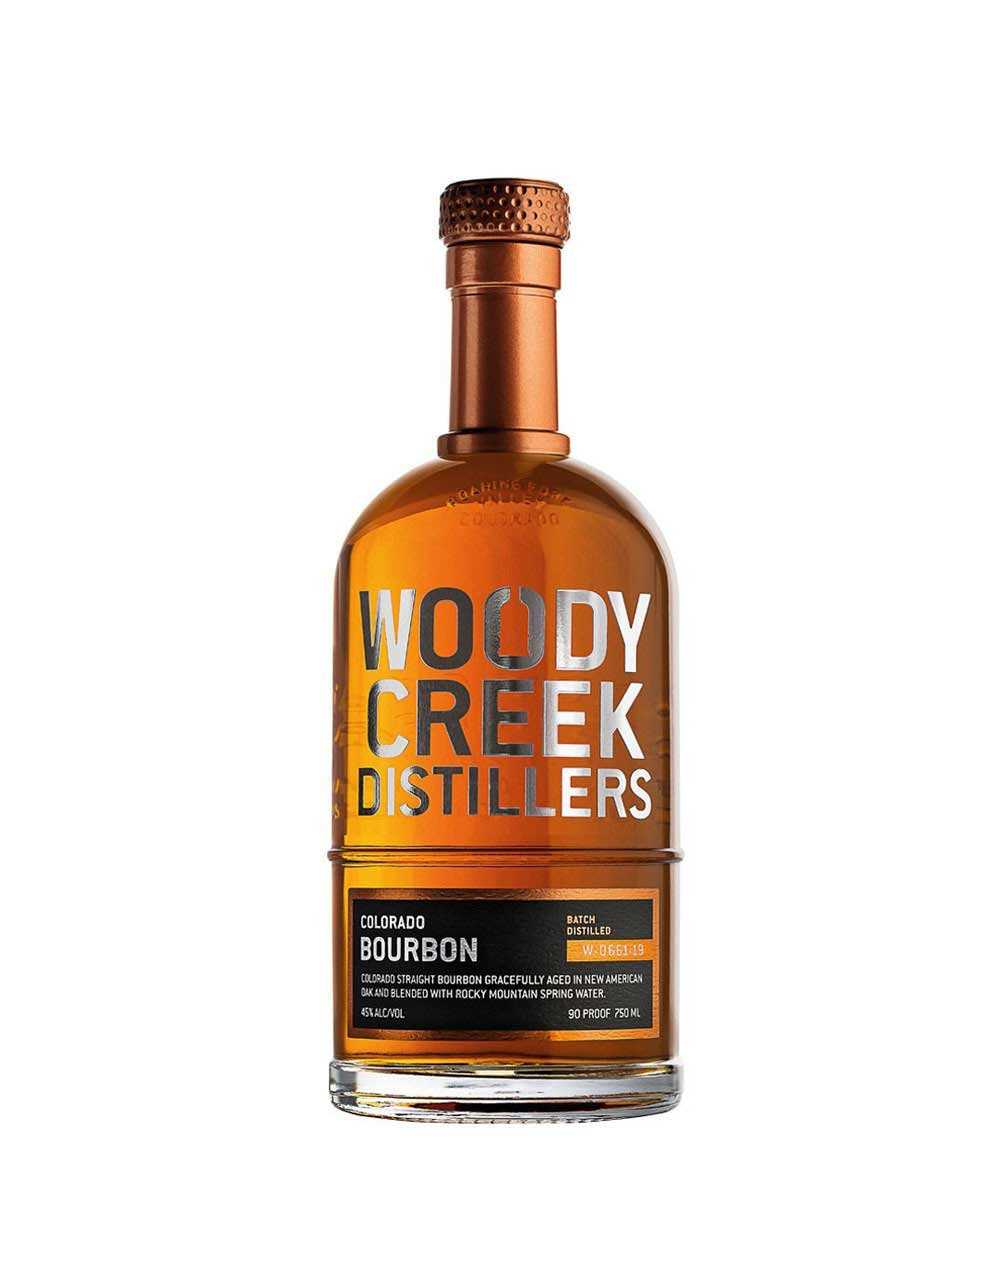 Willett Pot Still Reserve Straight Bourbon Whiskey